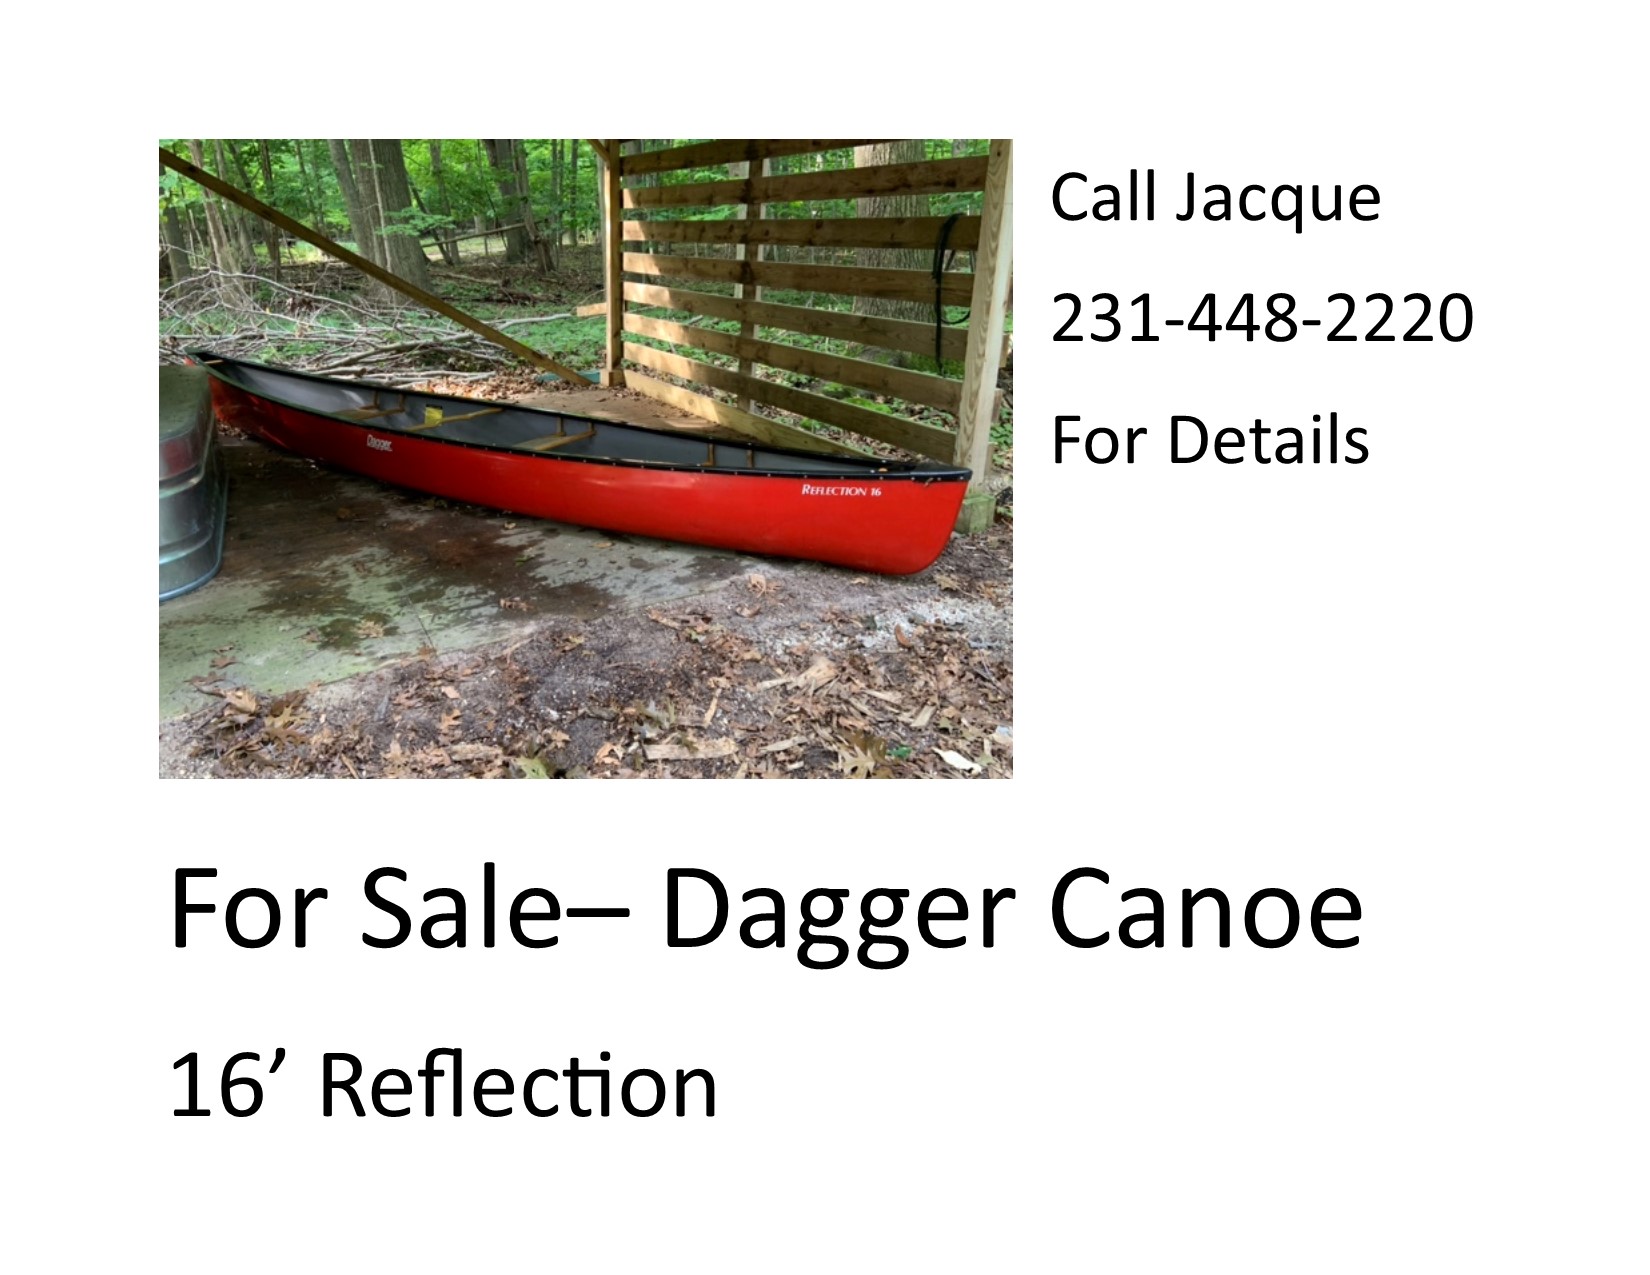 Canoe Ad.jpg